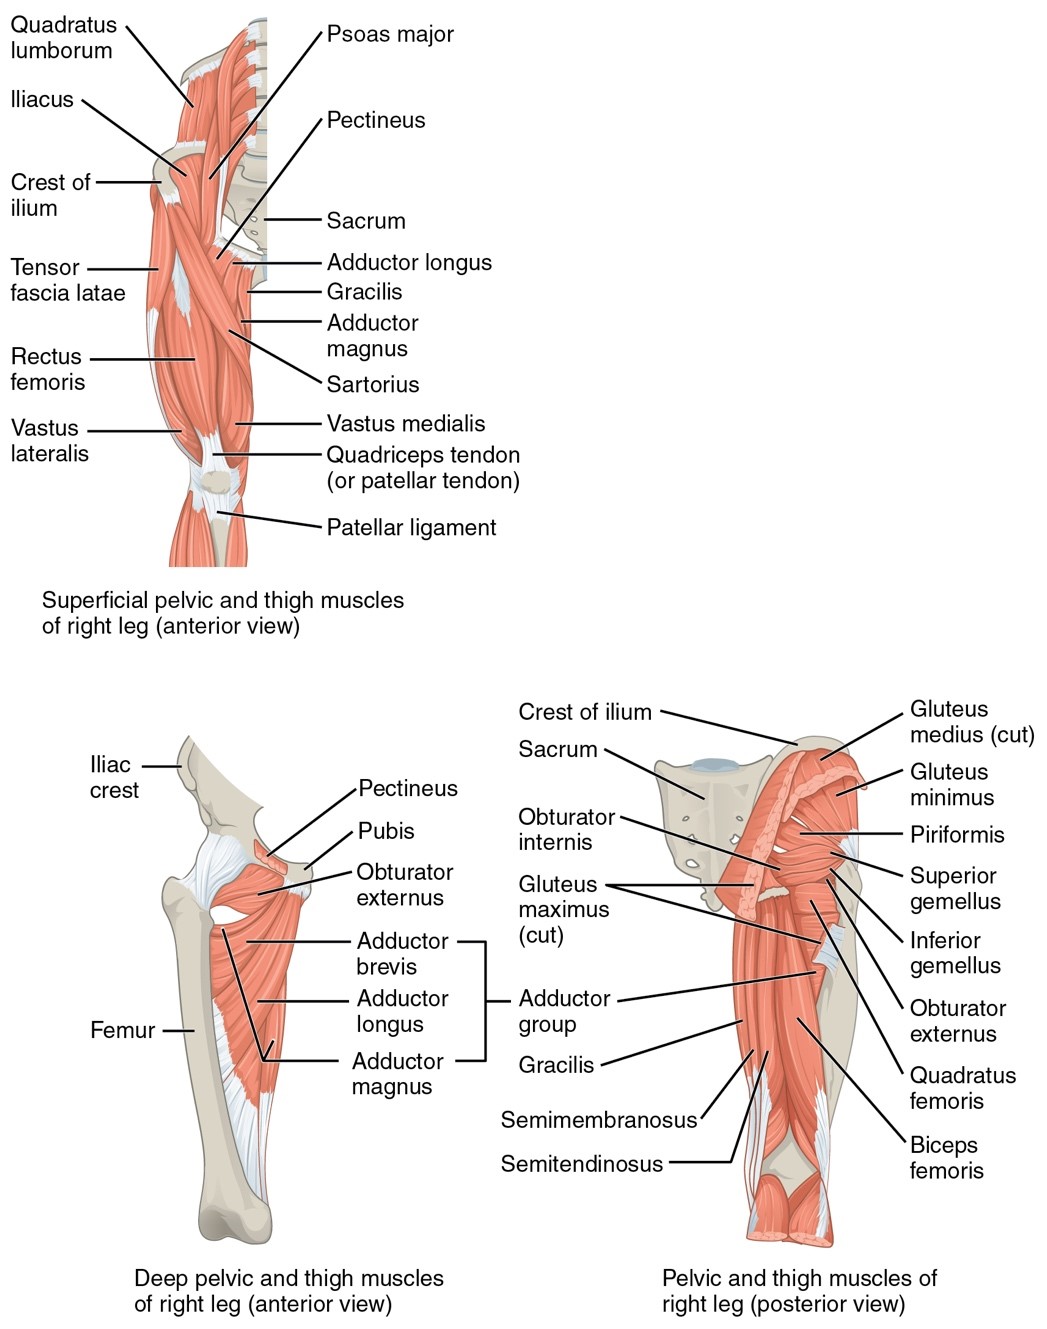 A&P Bone Test: Pelvic Girdle and Lower Limb Diagram